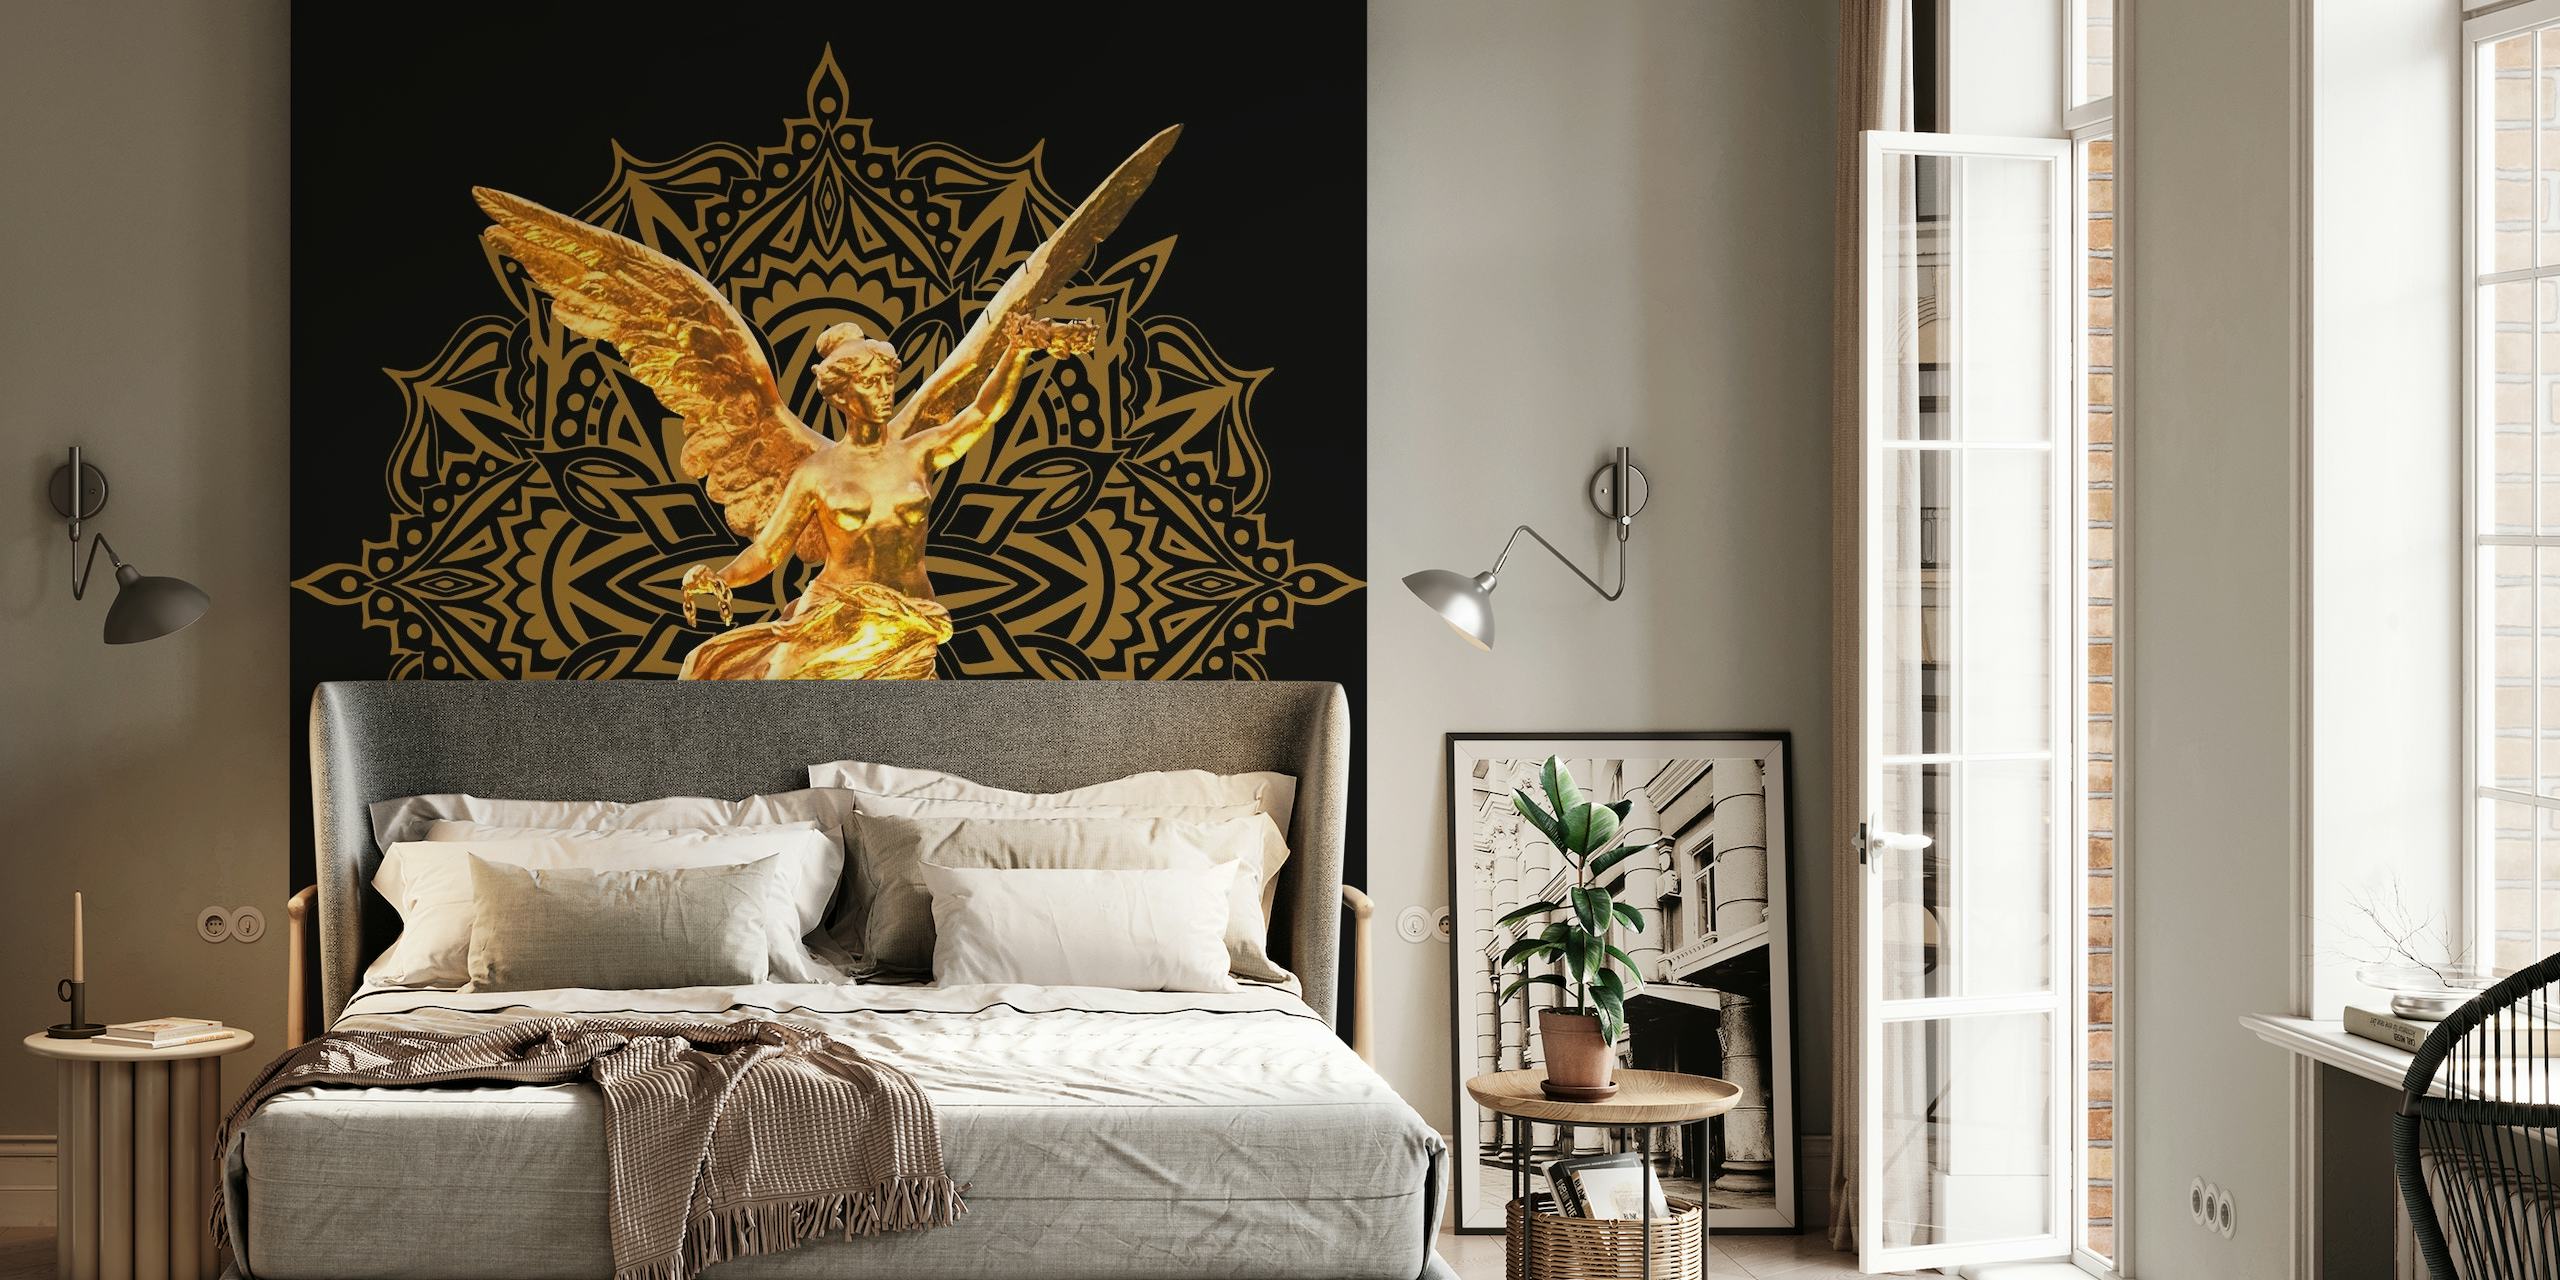 Golden Angel wall mural with mandala pattern